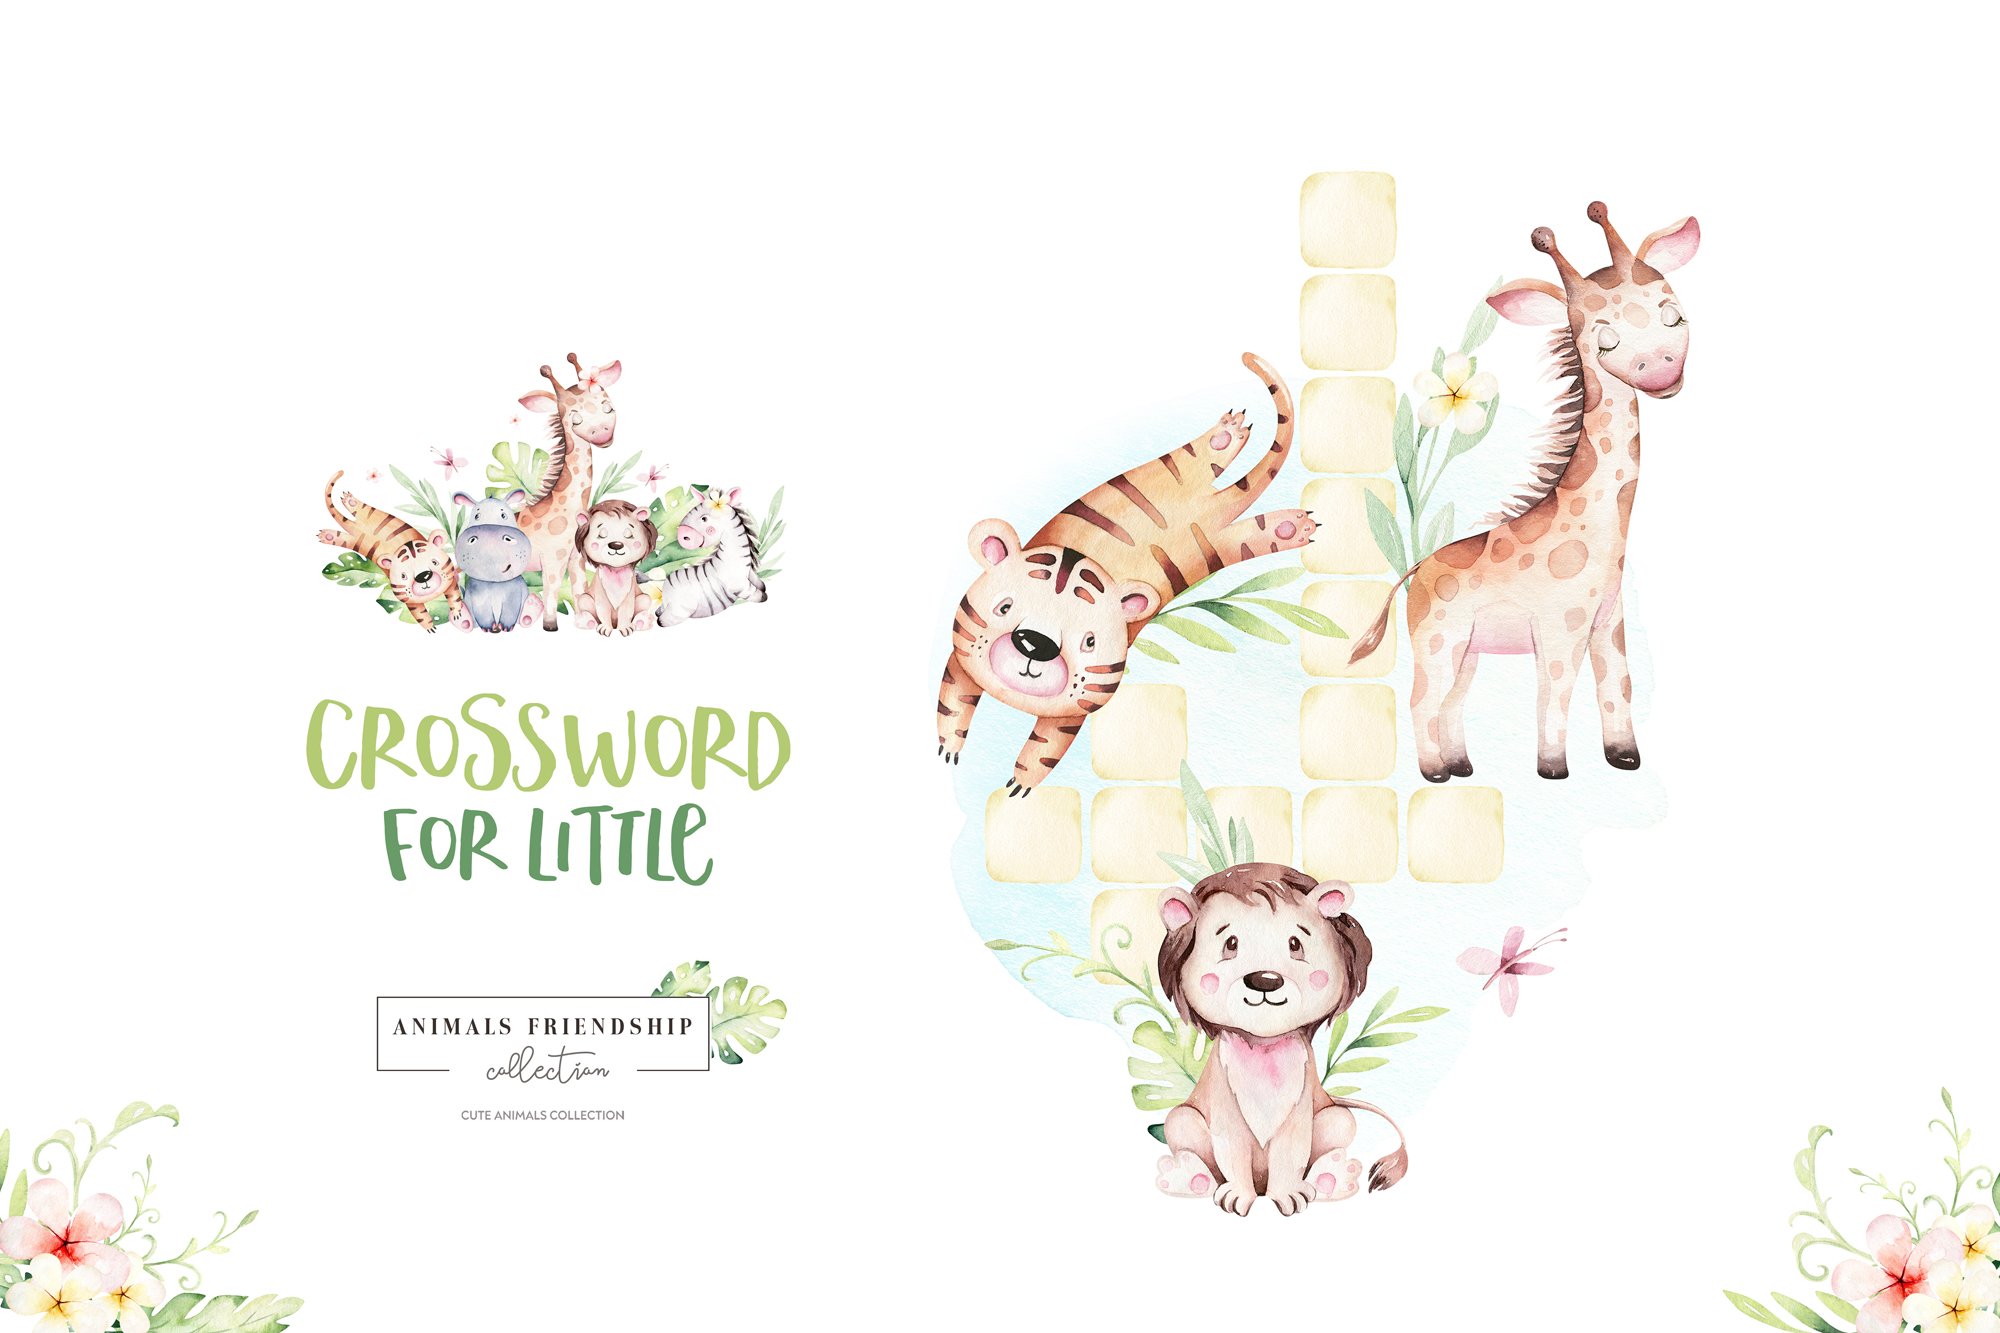 Animals Friendship - Baby Collection